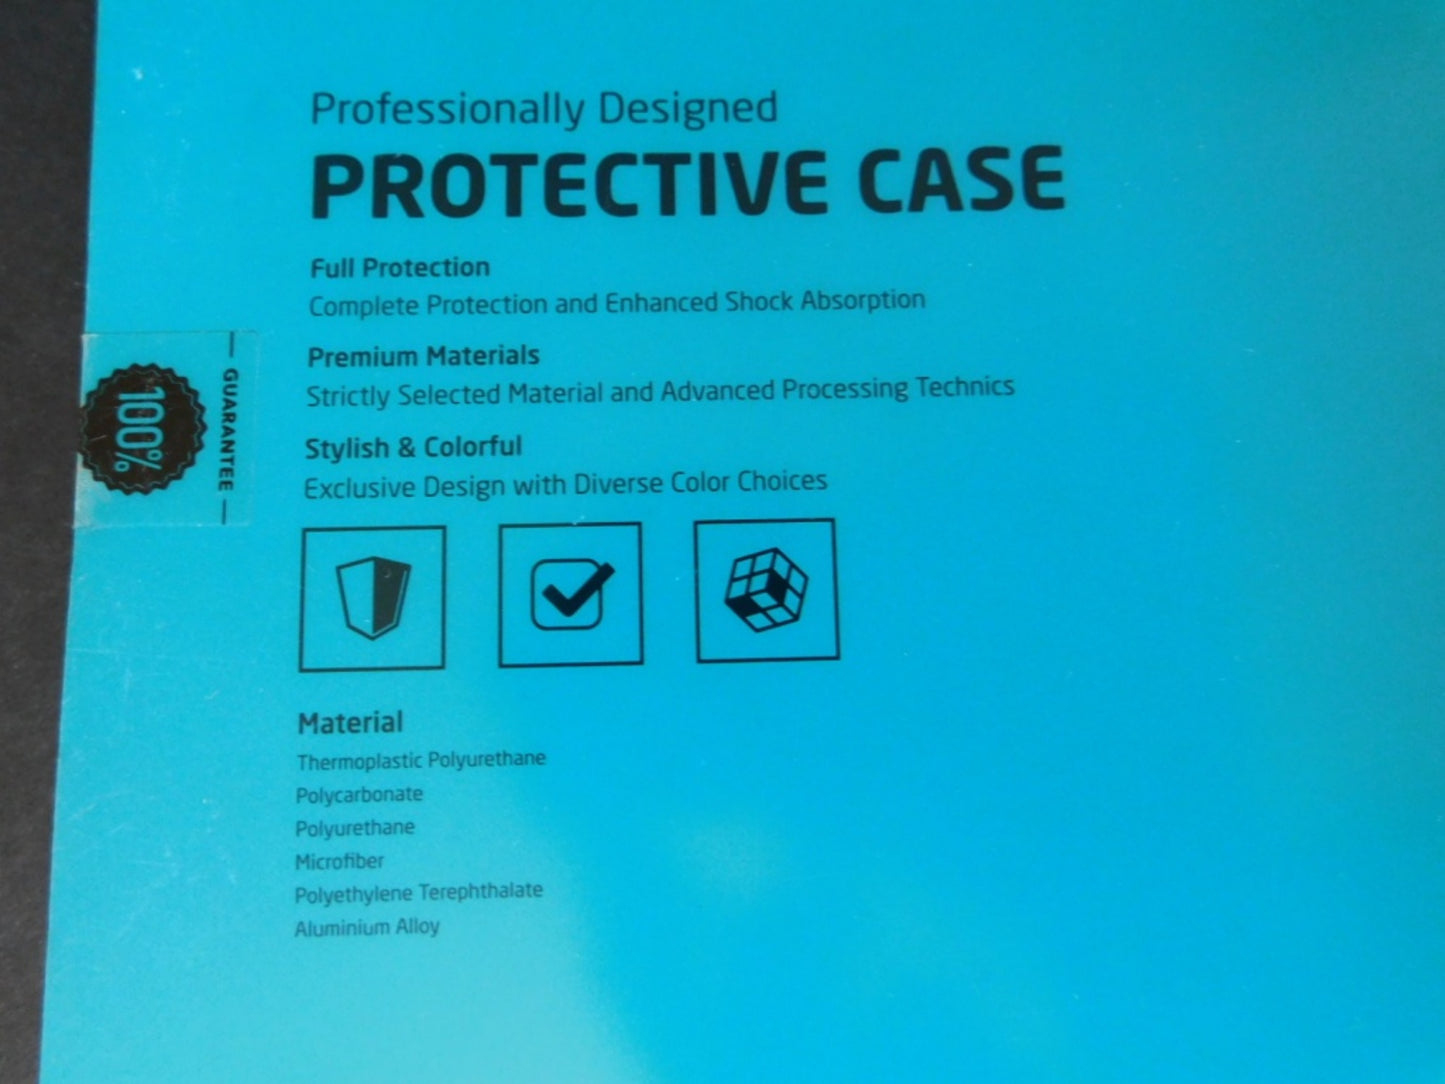 ESR protective shock absorption case Apple iPad Pro 13 inch Champagne Gold NIP